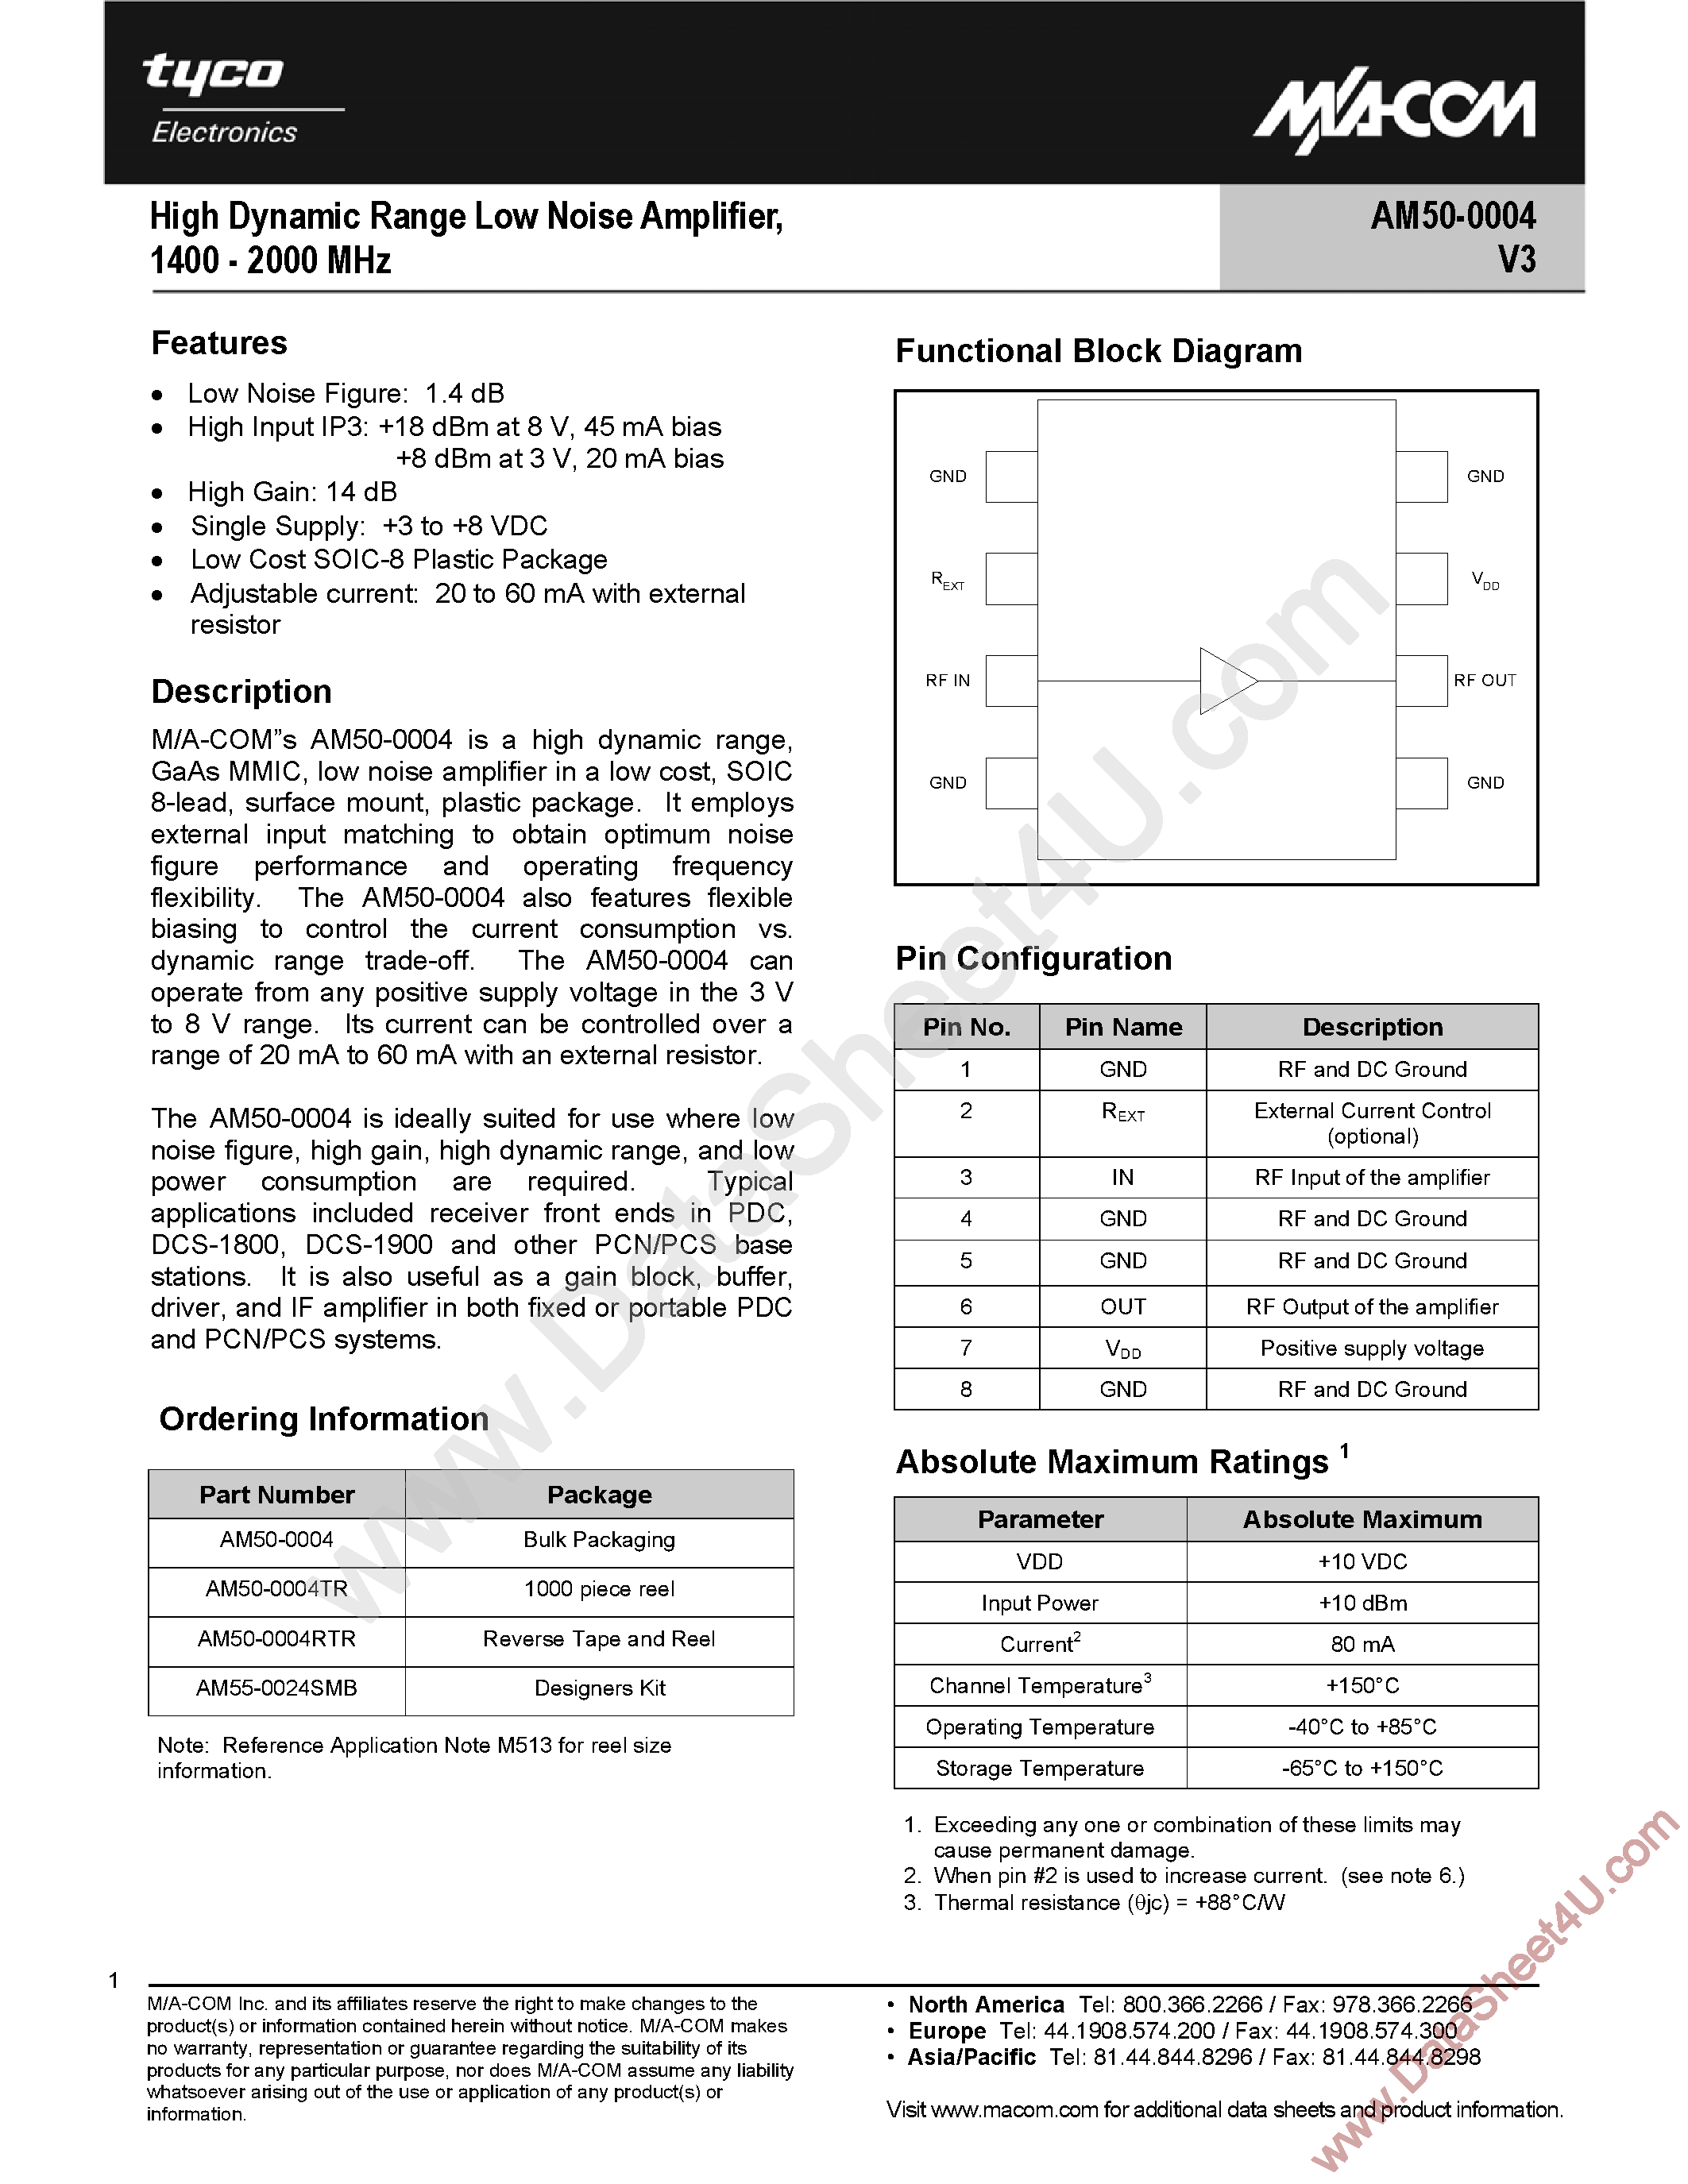 Даташит AM50-0004V3 - High Dynamic Range Low Noise Amplifier страница 1